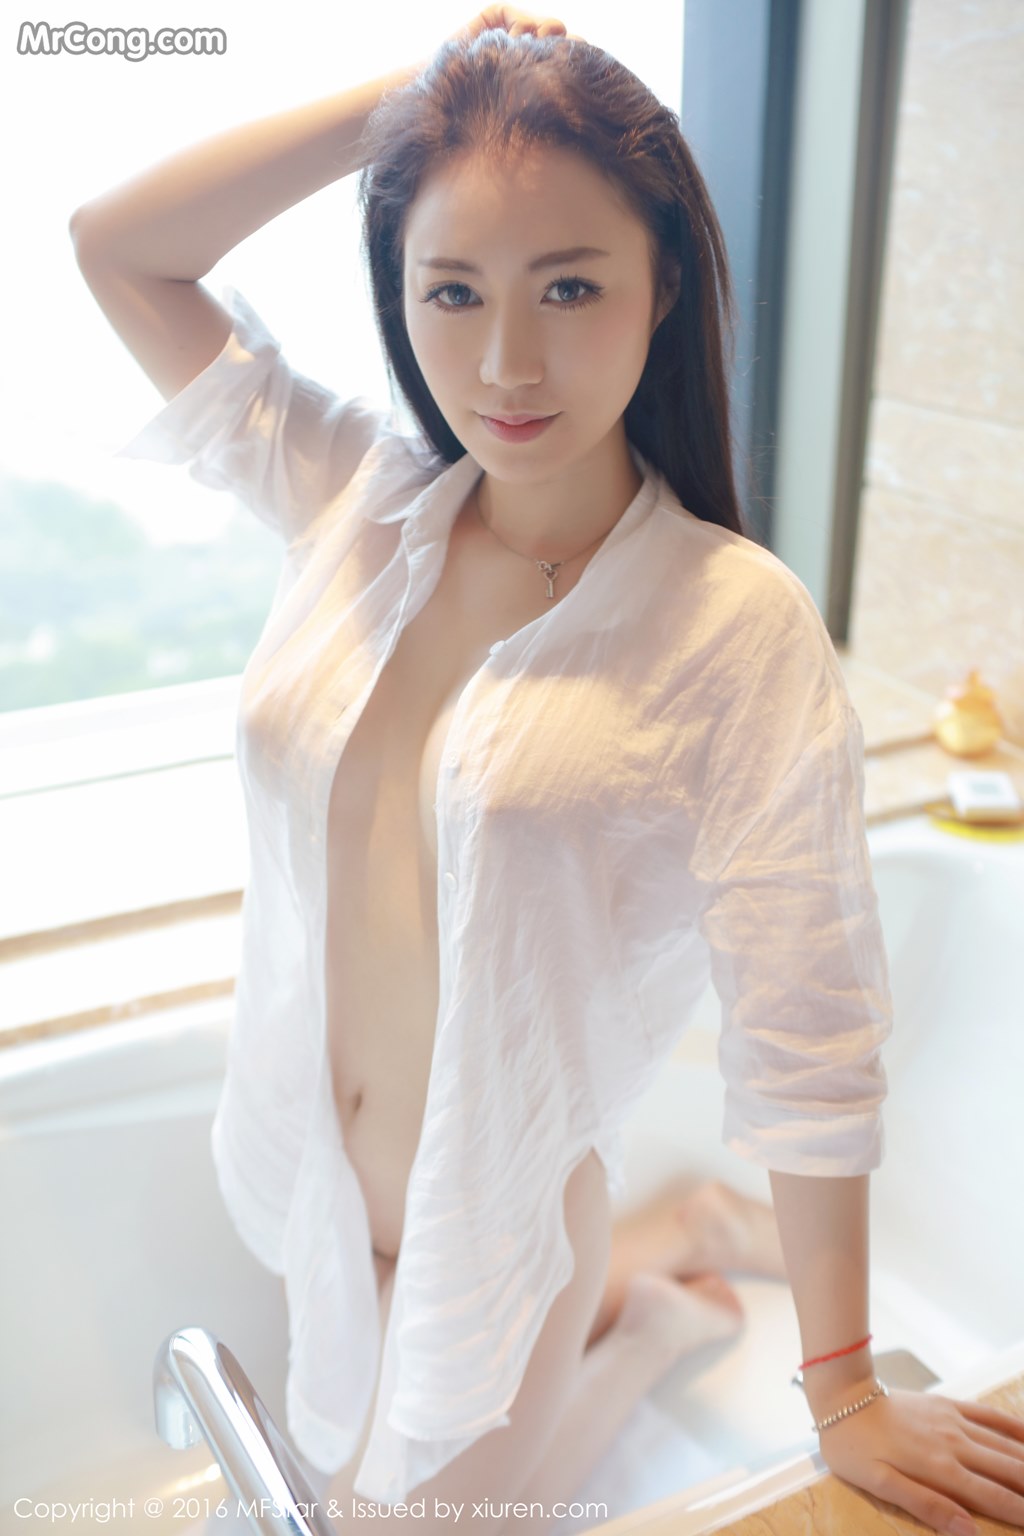 MFStar Vol.065: Model Xia Ling Man (夏 玲 蔓) (51 photos)